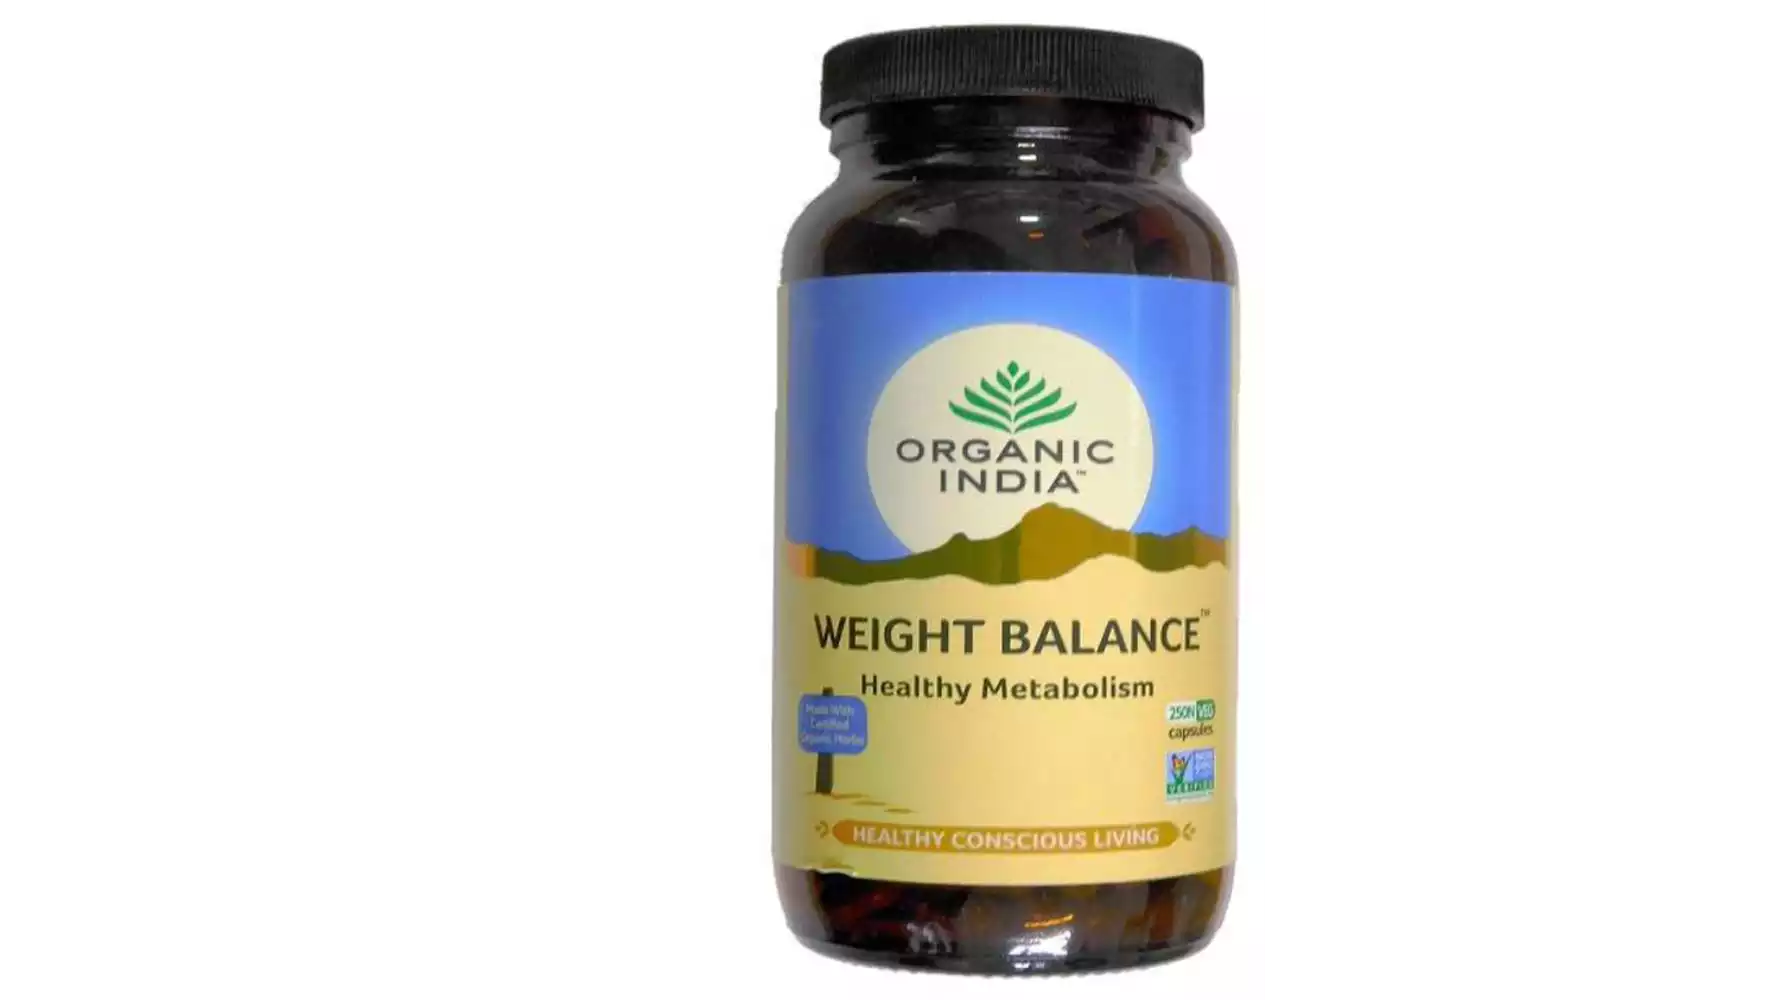 Organic India Weight Balance Capsules (250caps)